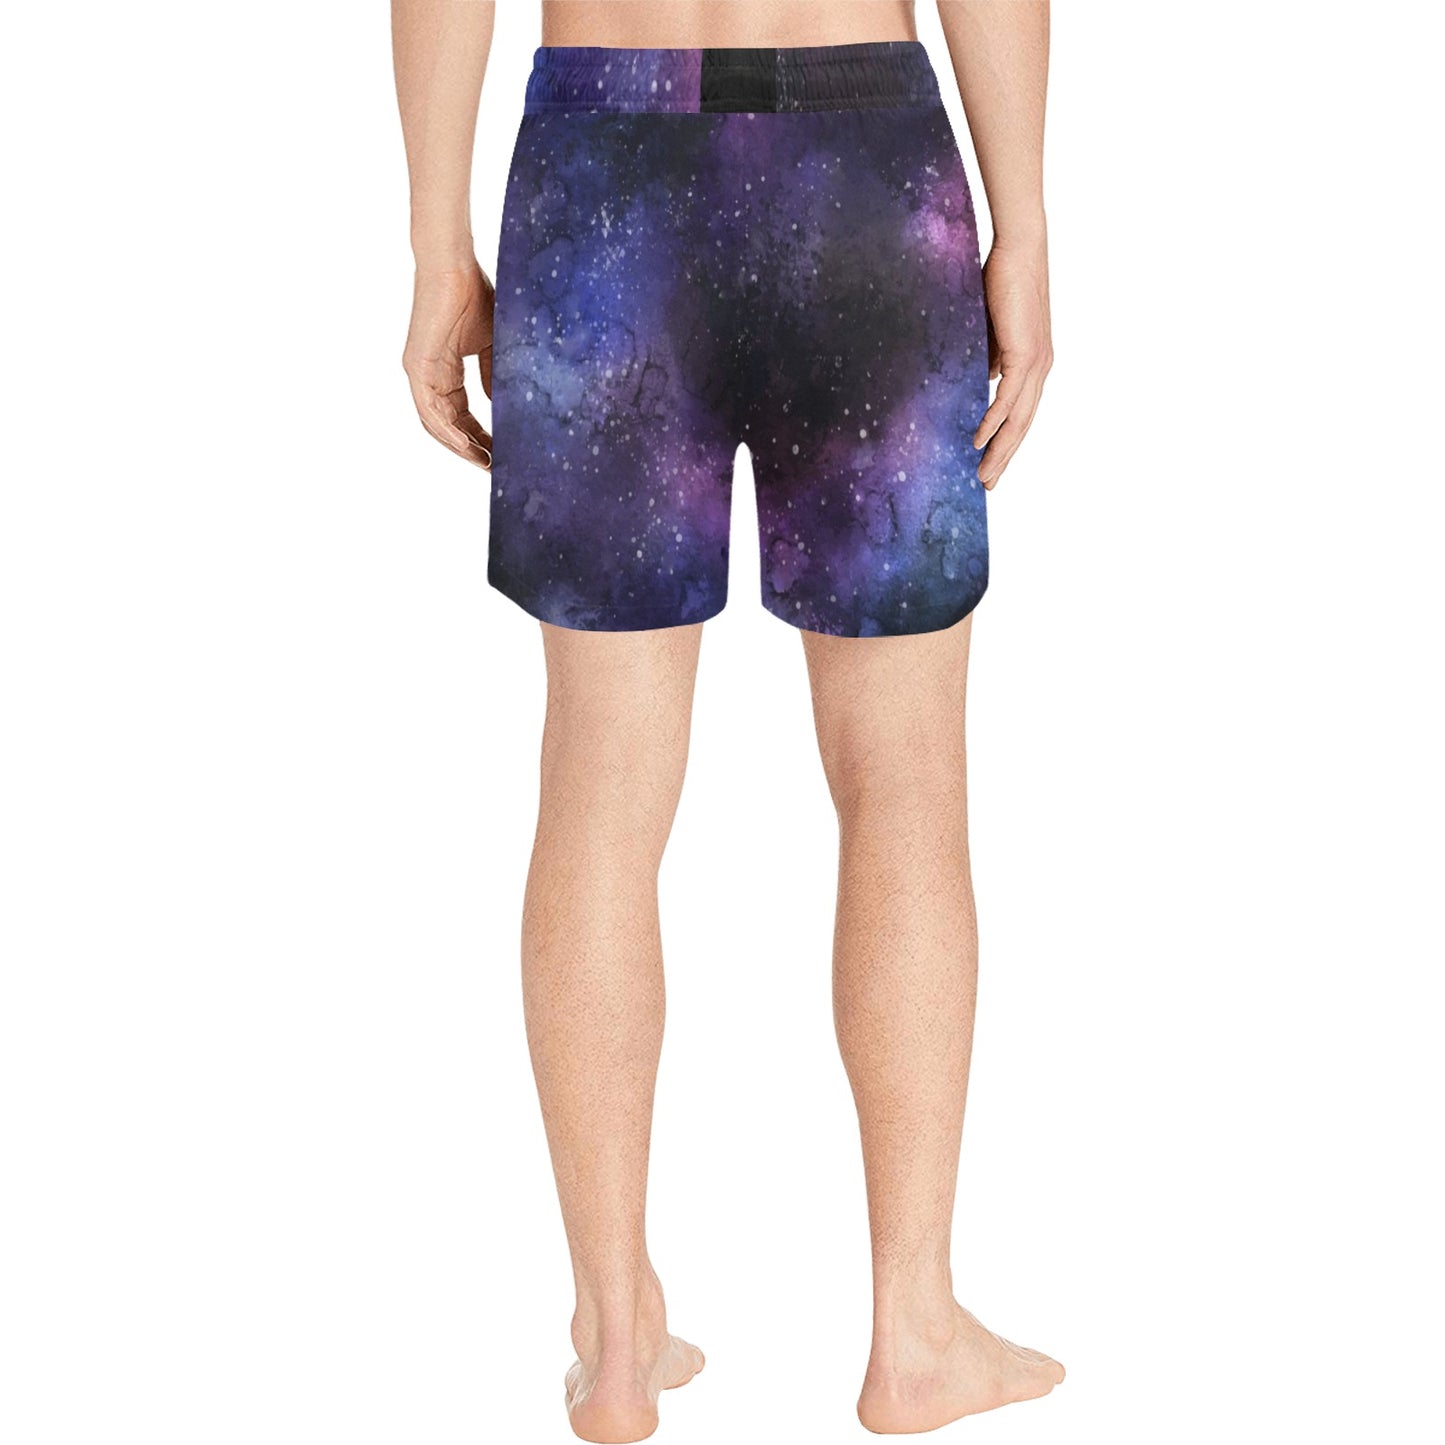 Galaxy Space Men Mid Length Shorts, Universe Purple Stars Beach Swim Trunks with Pockets & Mesh Drawstring Boys Casual Bathing Suit Summer